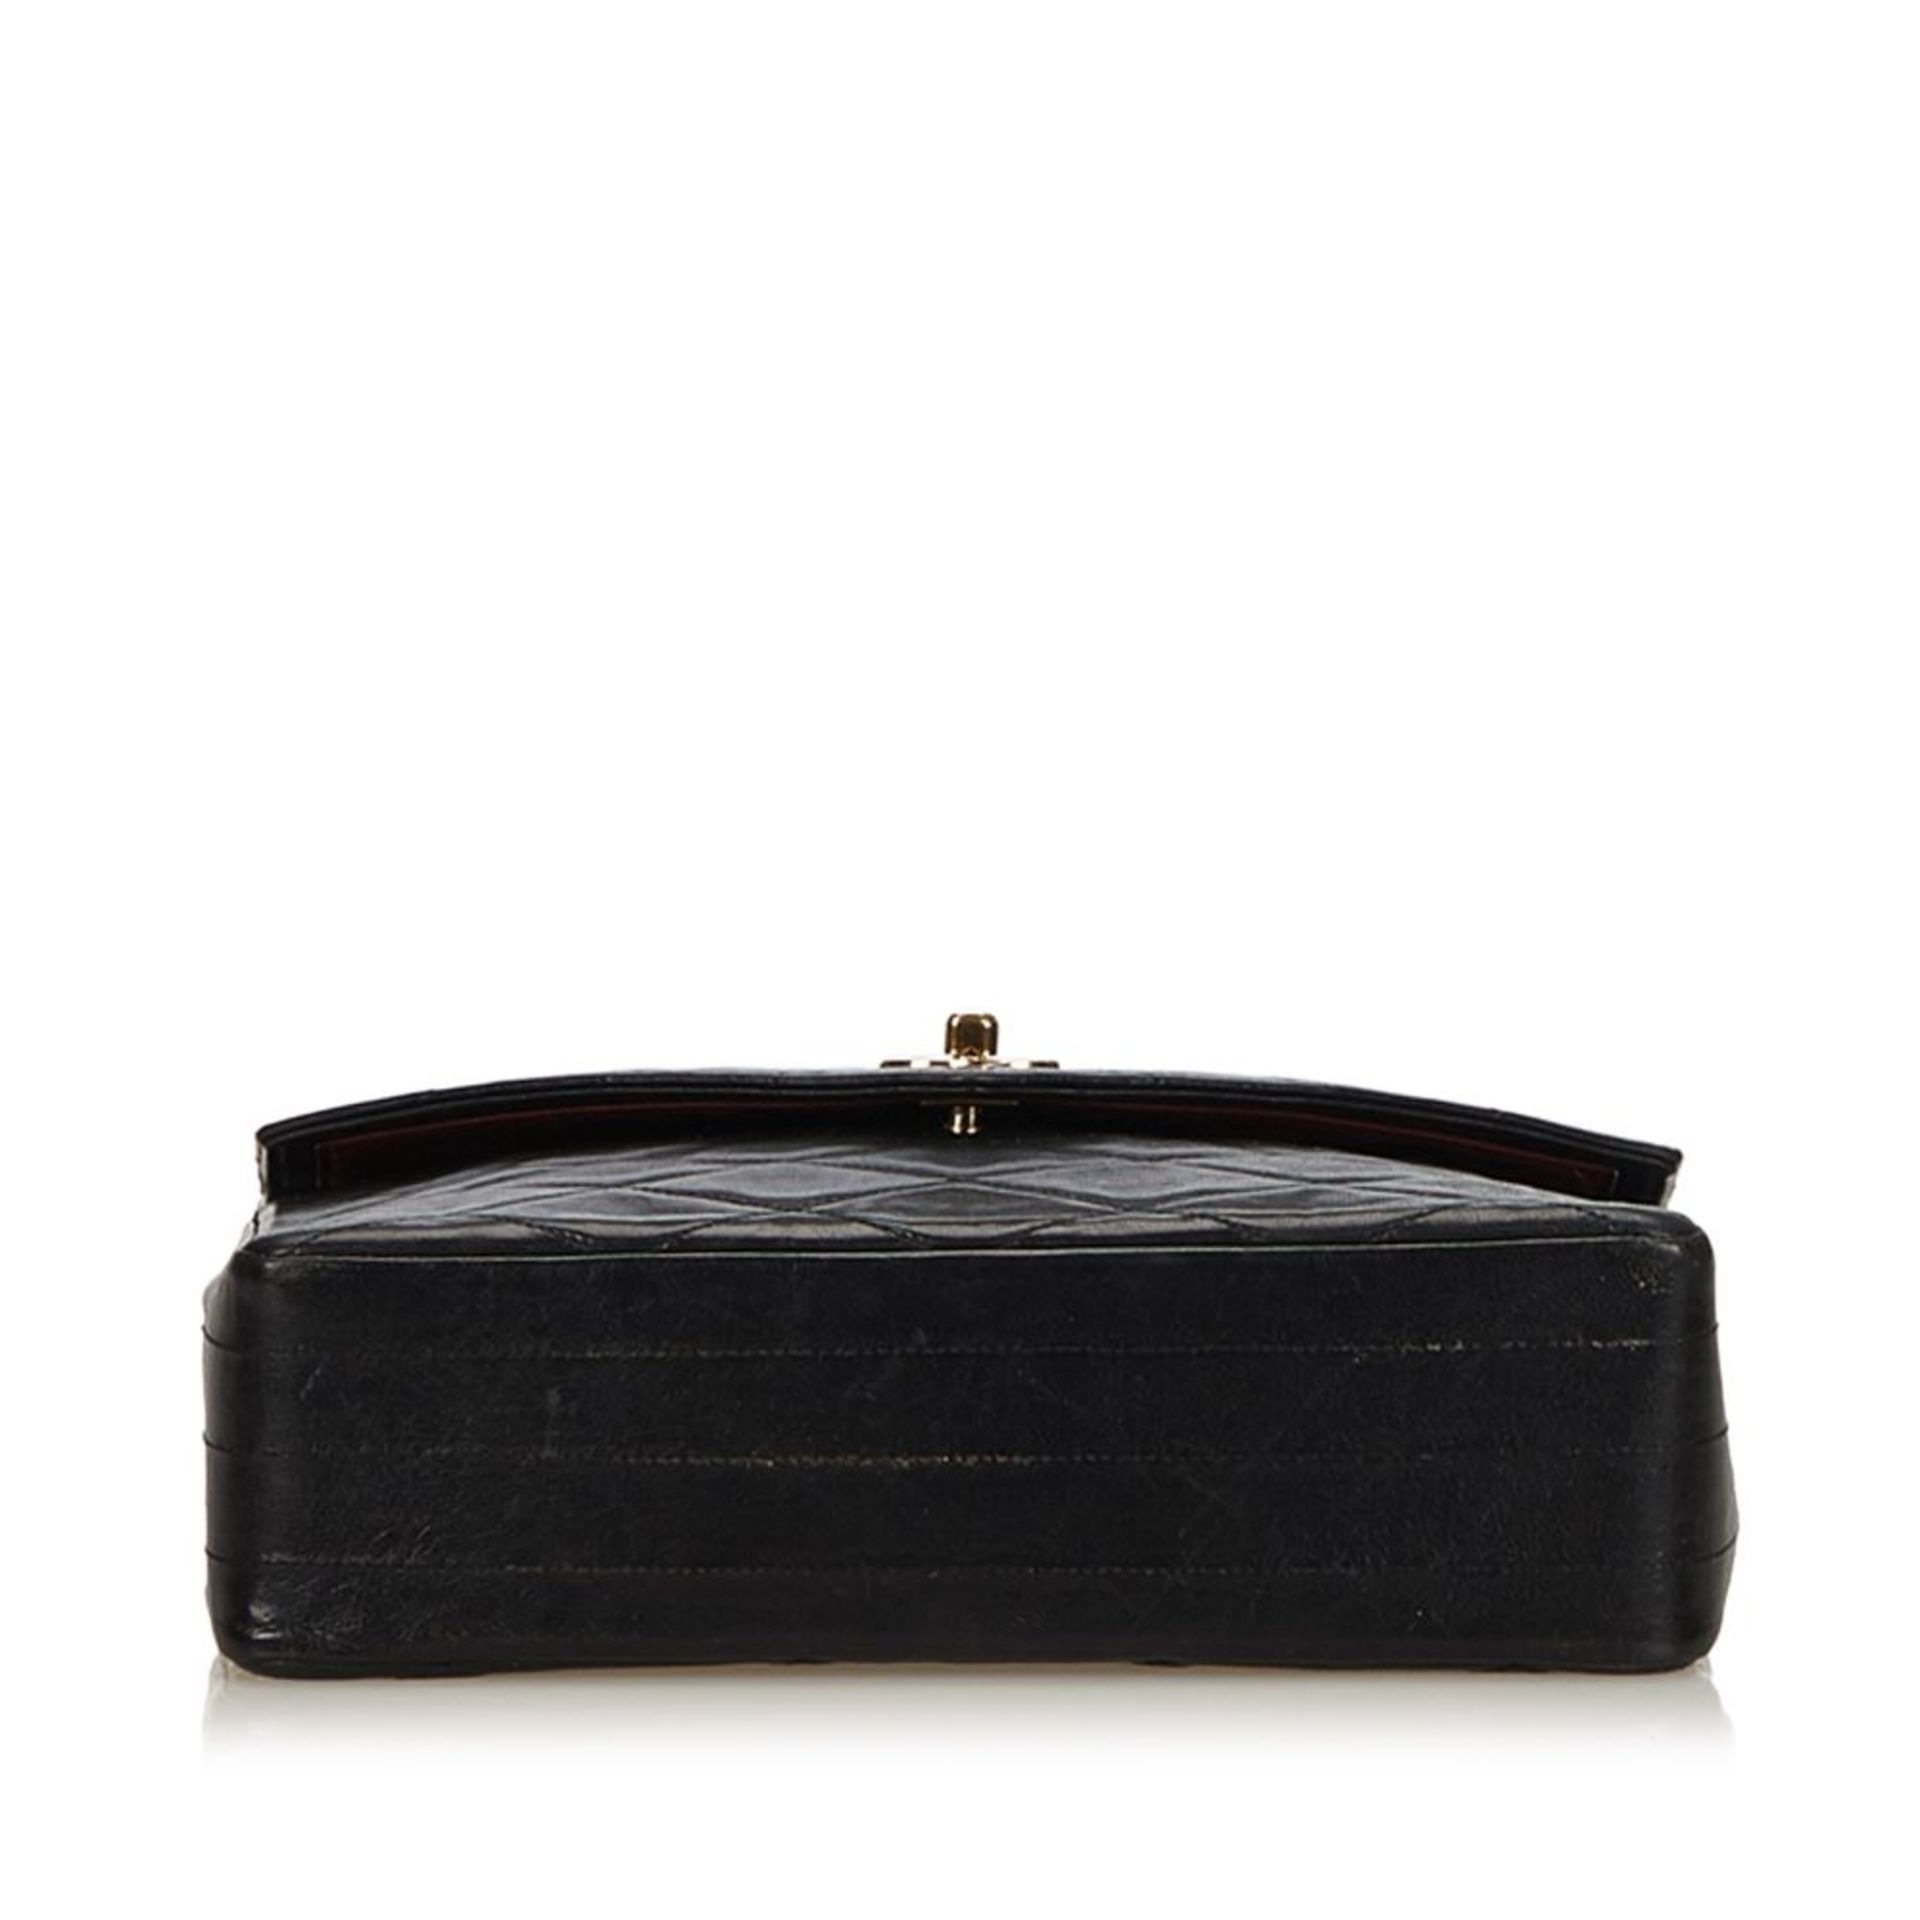 A Chanel matelassé leather chain flap bag,featuring a leather body, exterior back open pocket, - Bild 4 aus 5